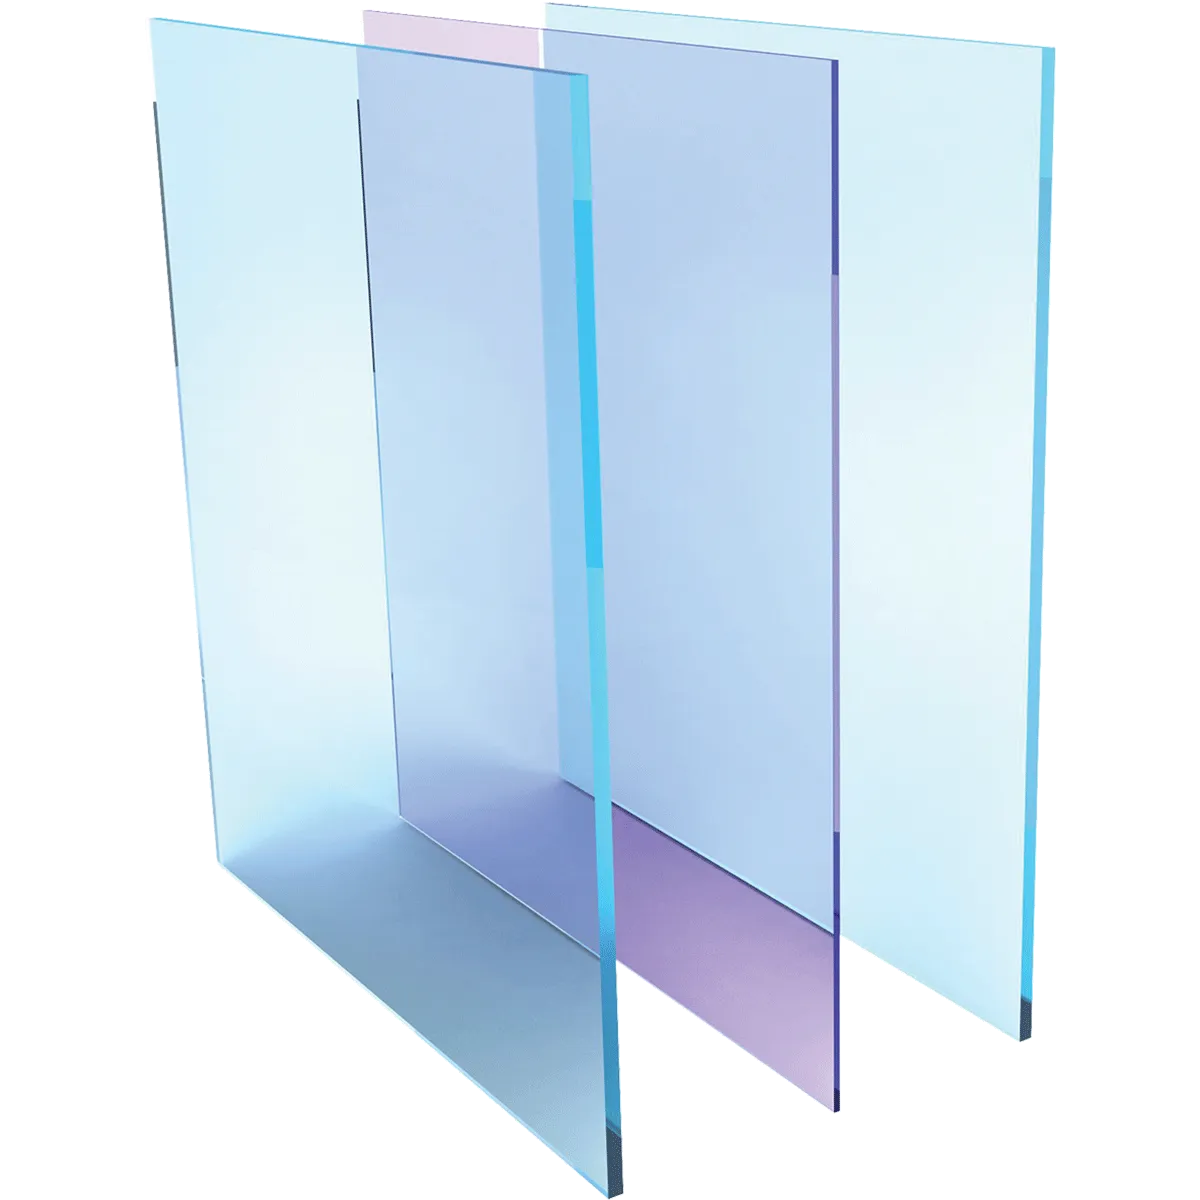 architectural glass vanceva colored laminated glass